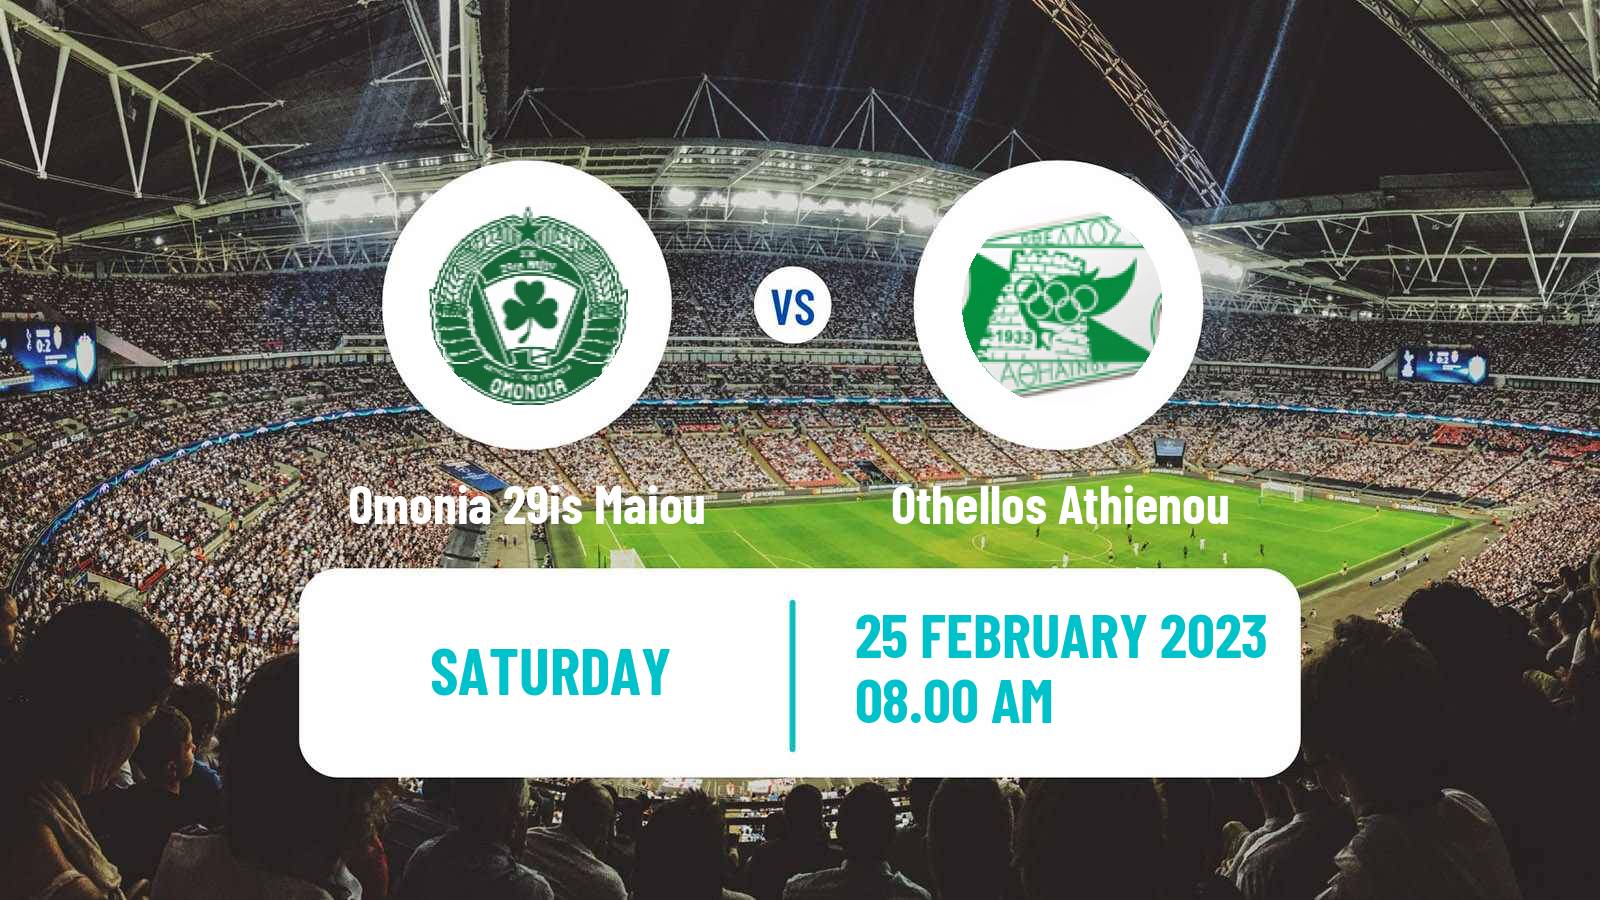 Soccer Cypriot Division 2 Omonia 29is Maiou - Othellos Athienou